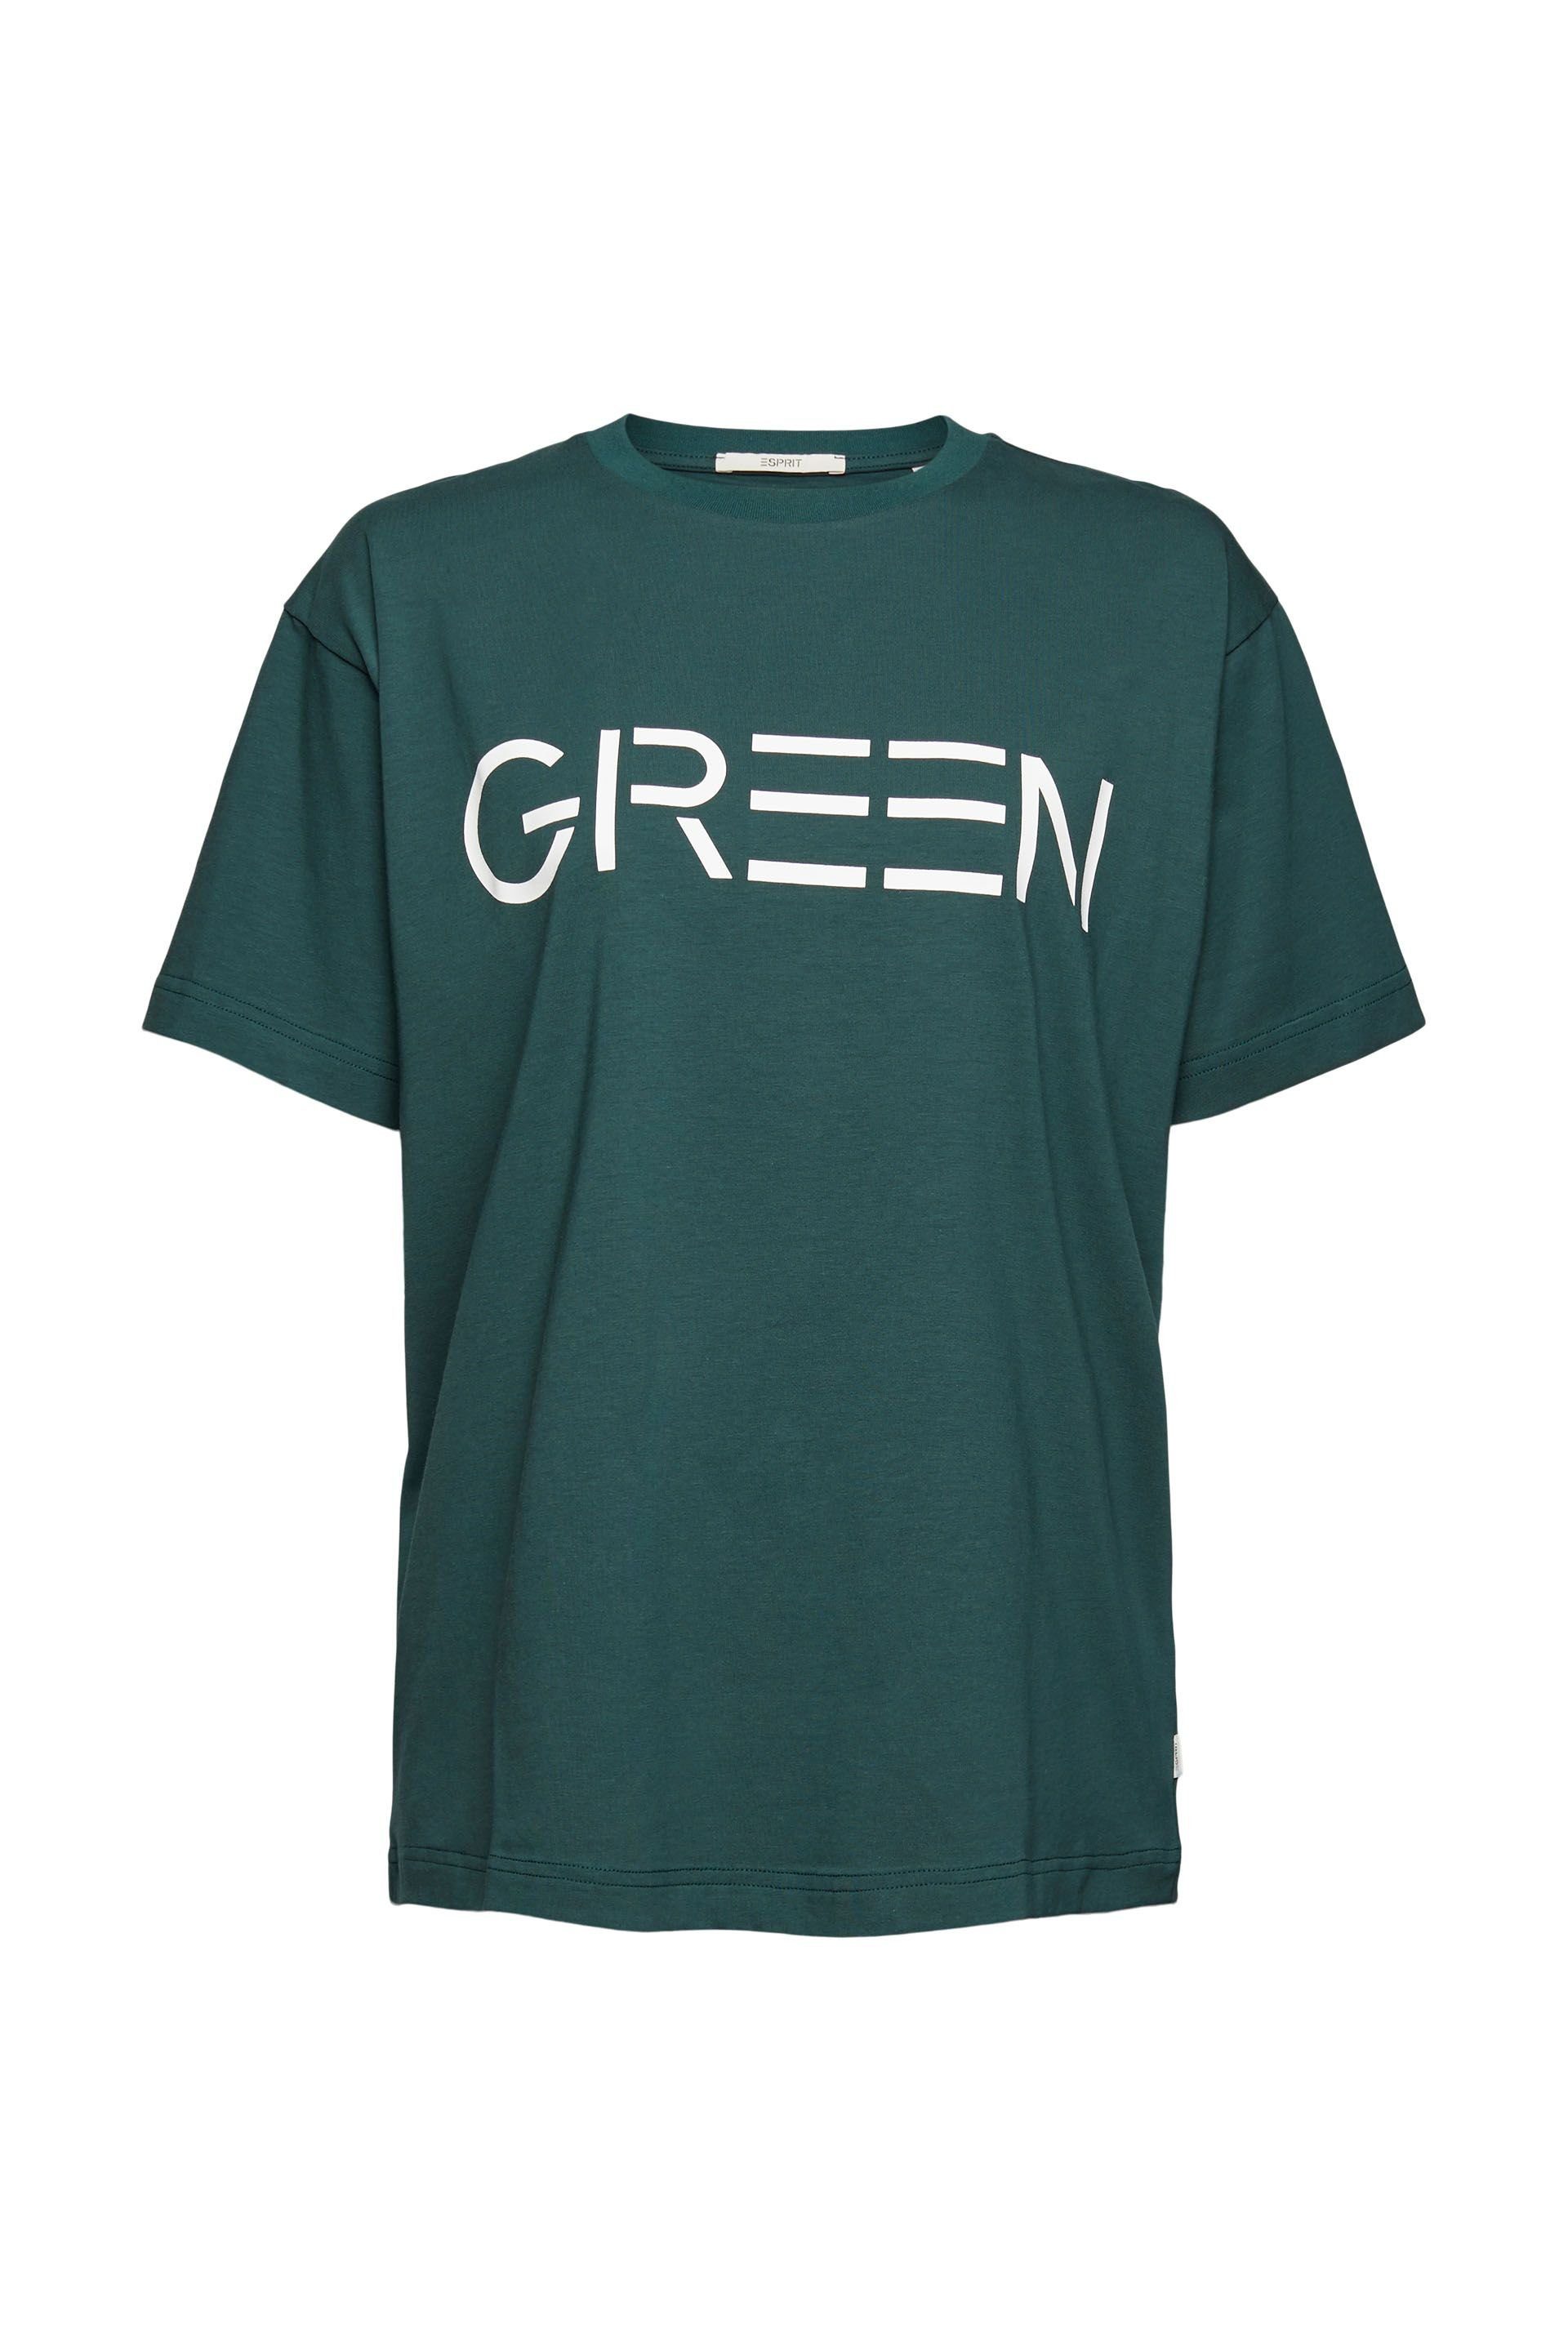 Esprit T-Shirt dark green